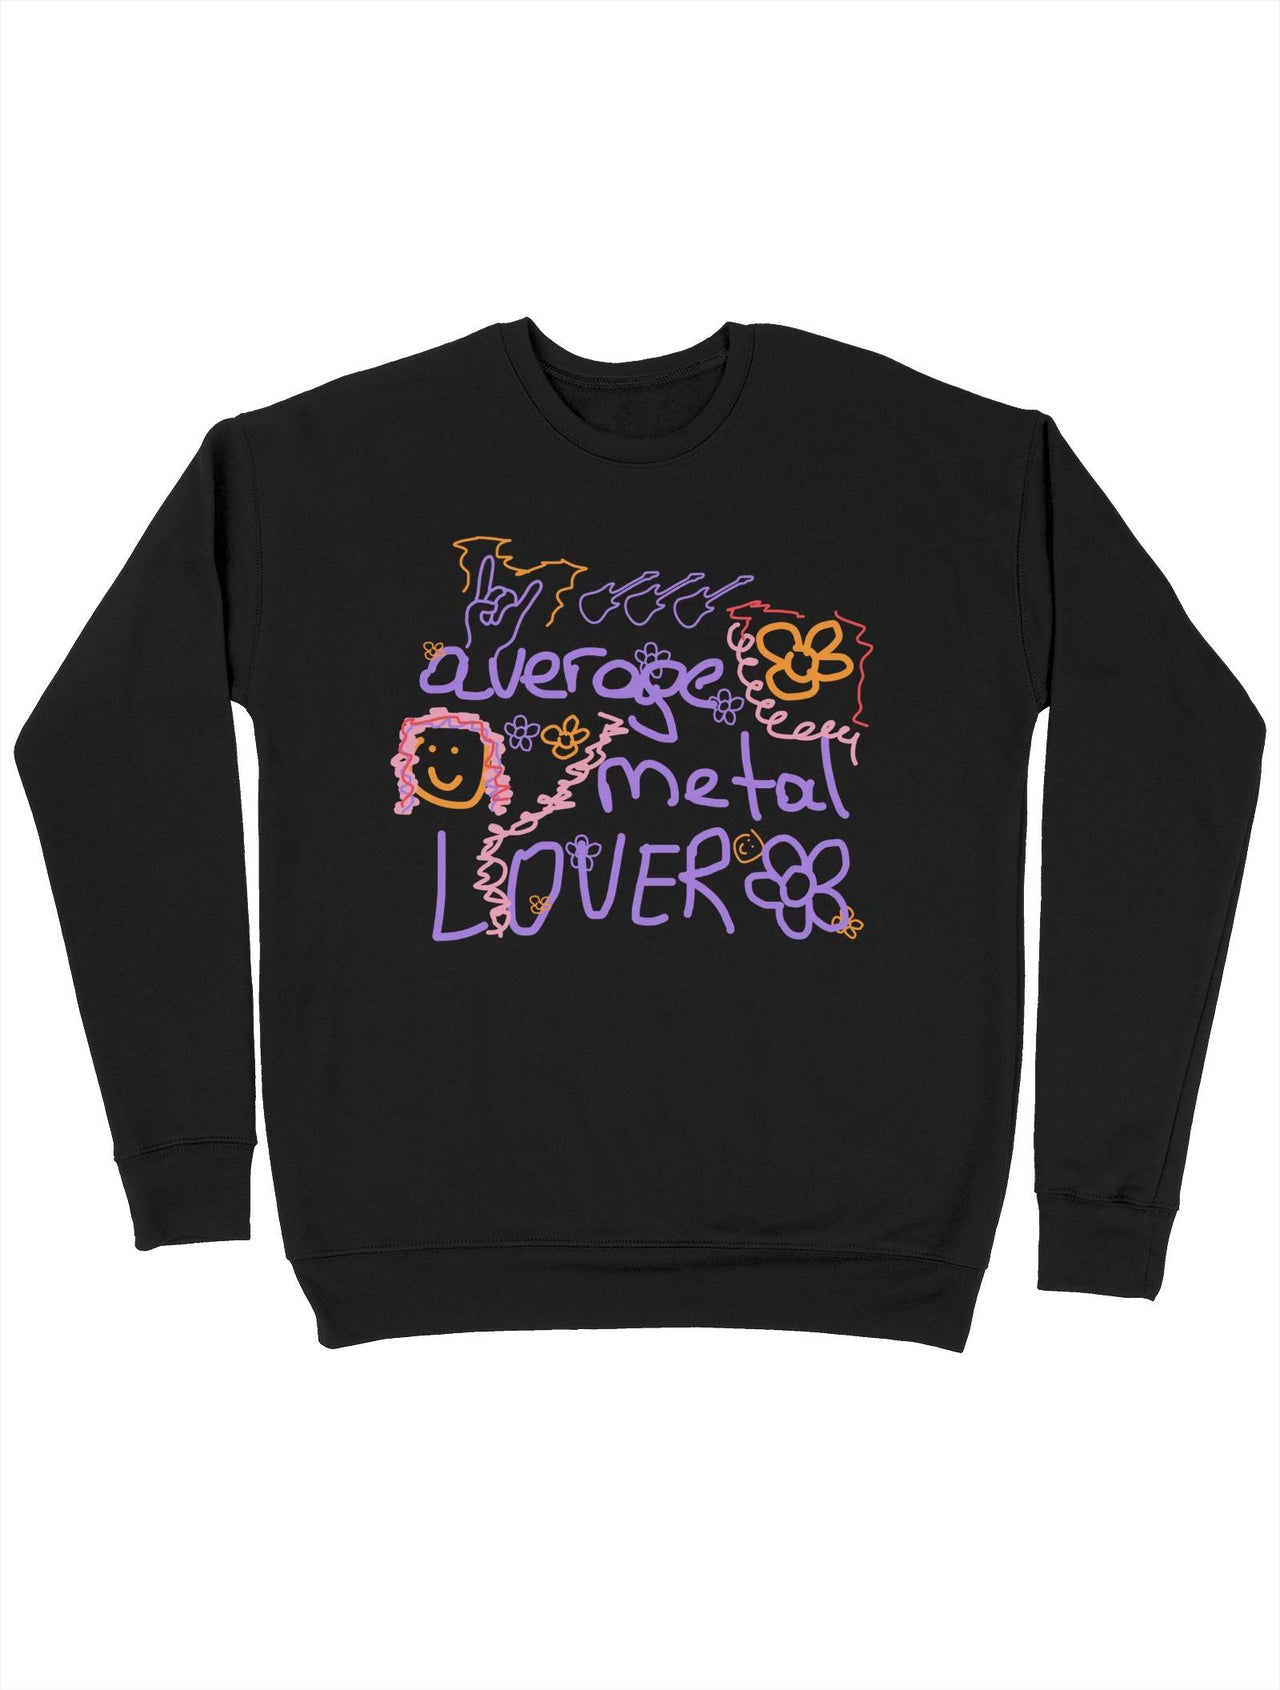 Average Metal Lover Sweatshirt